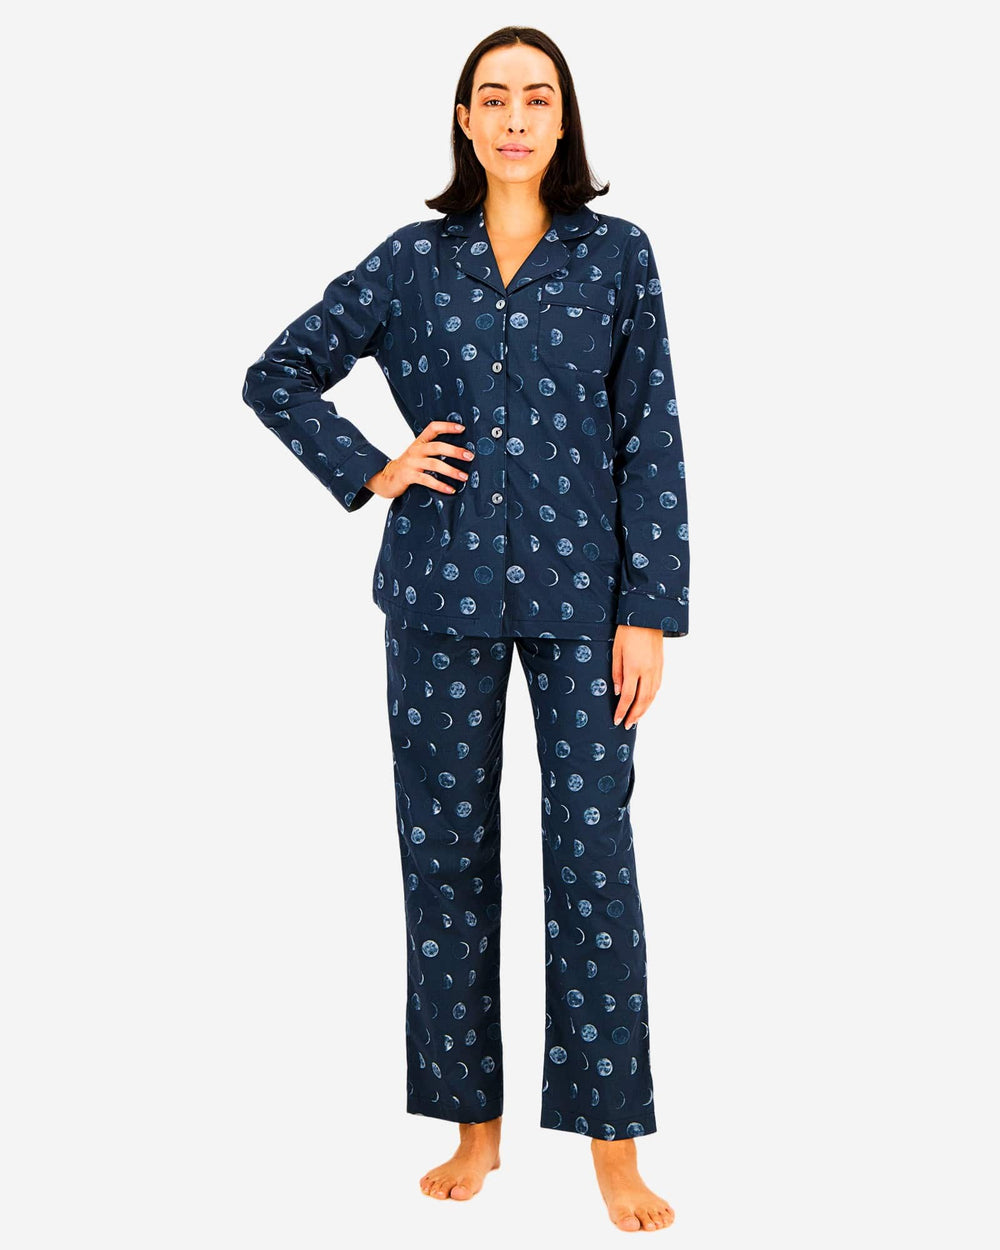 Blue matching family pyjamas